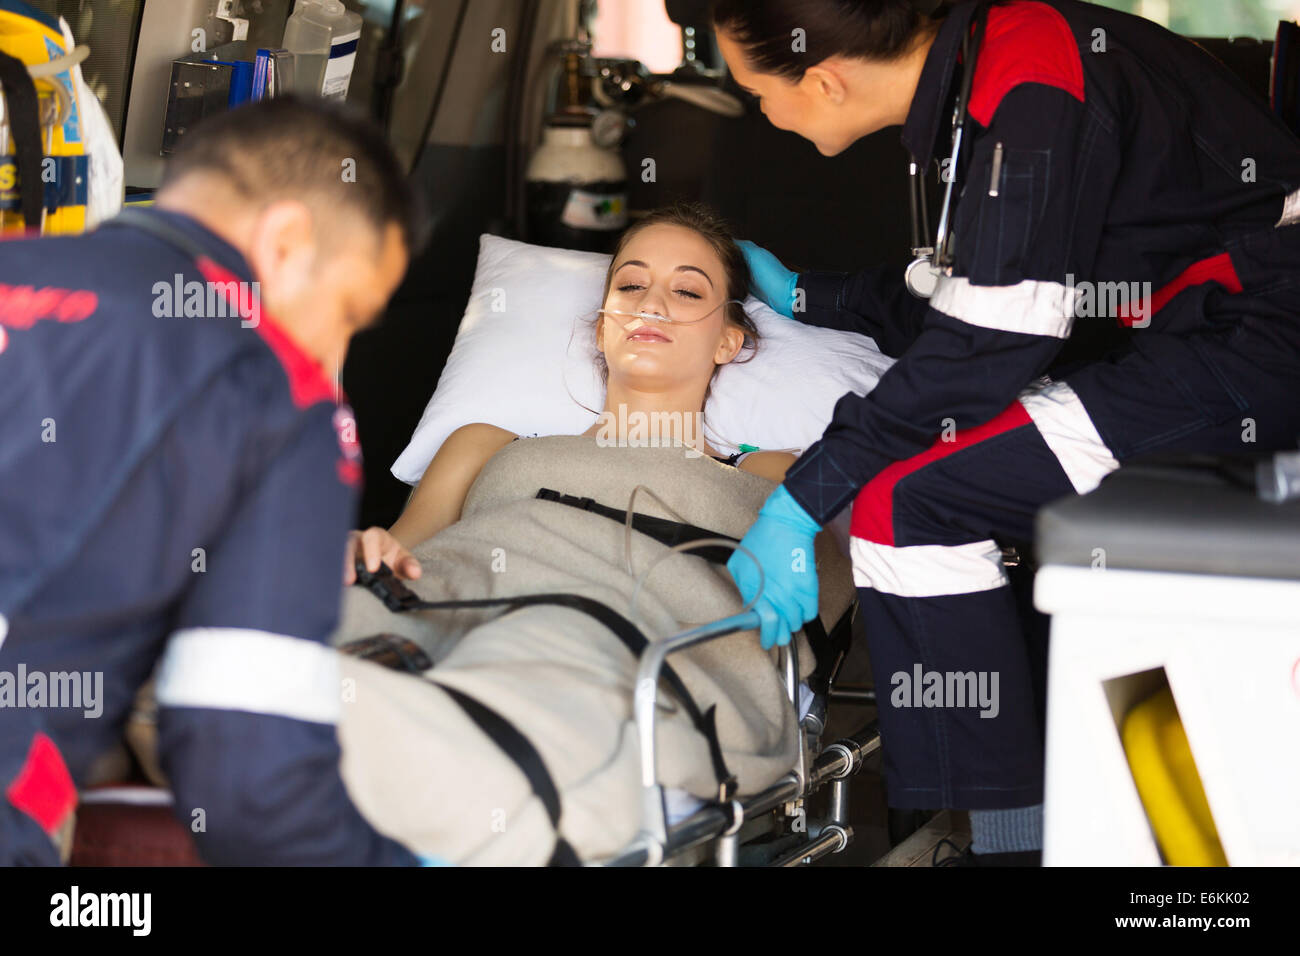 caring paramedic comforting sick patient on ambulance Stock Photo